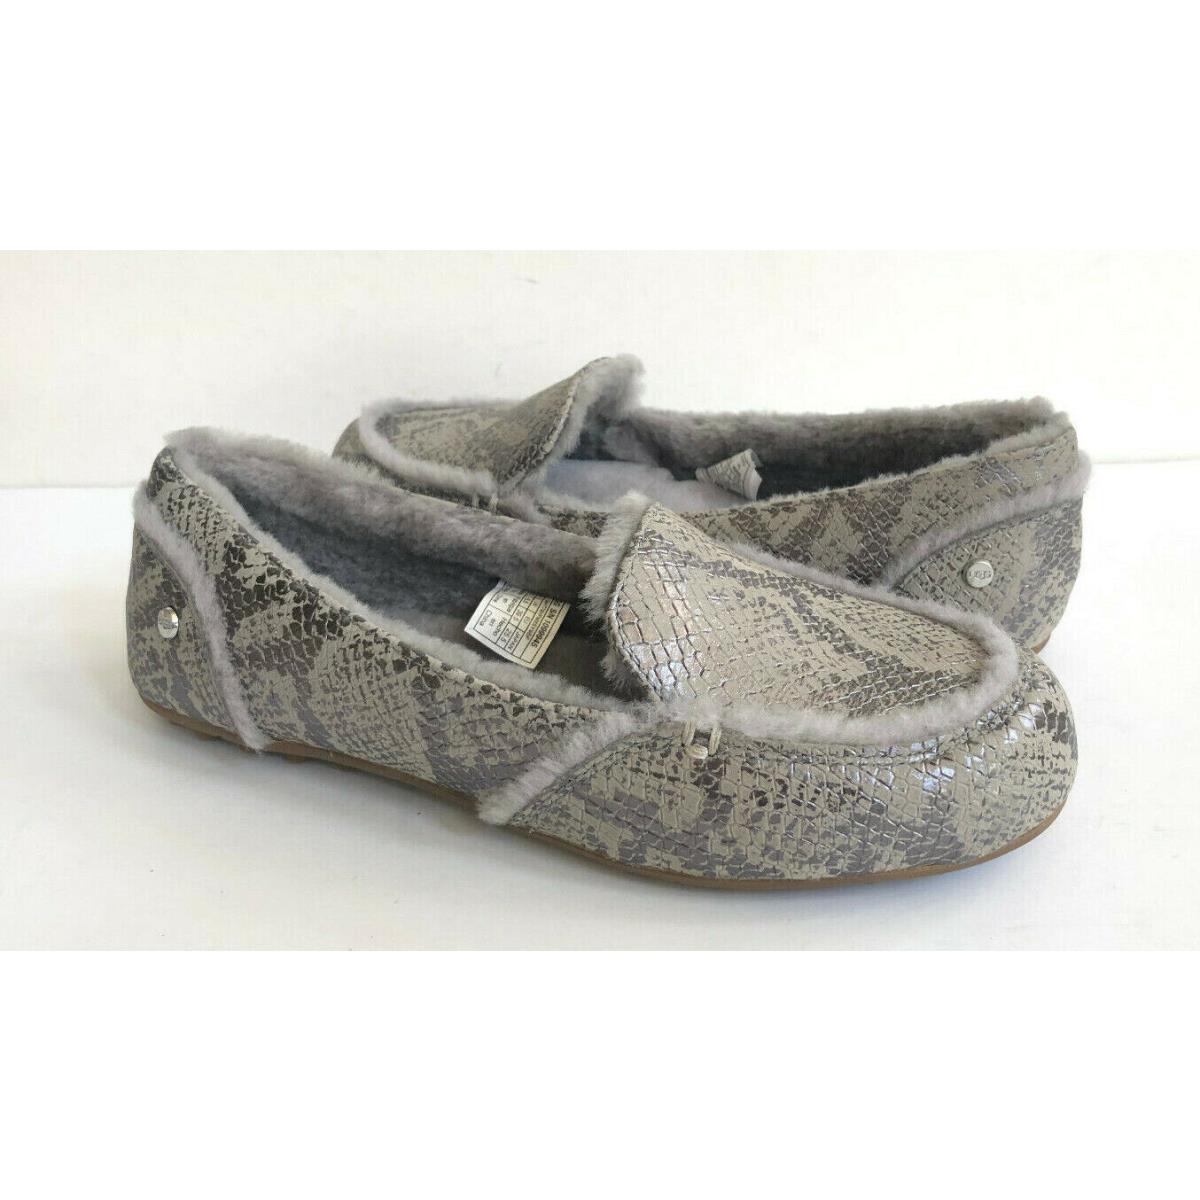 Ugg Hailey Metallic Snake Silver Shearling Loafers Shoes US 11 / EU 42 / UK 9